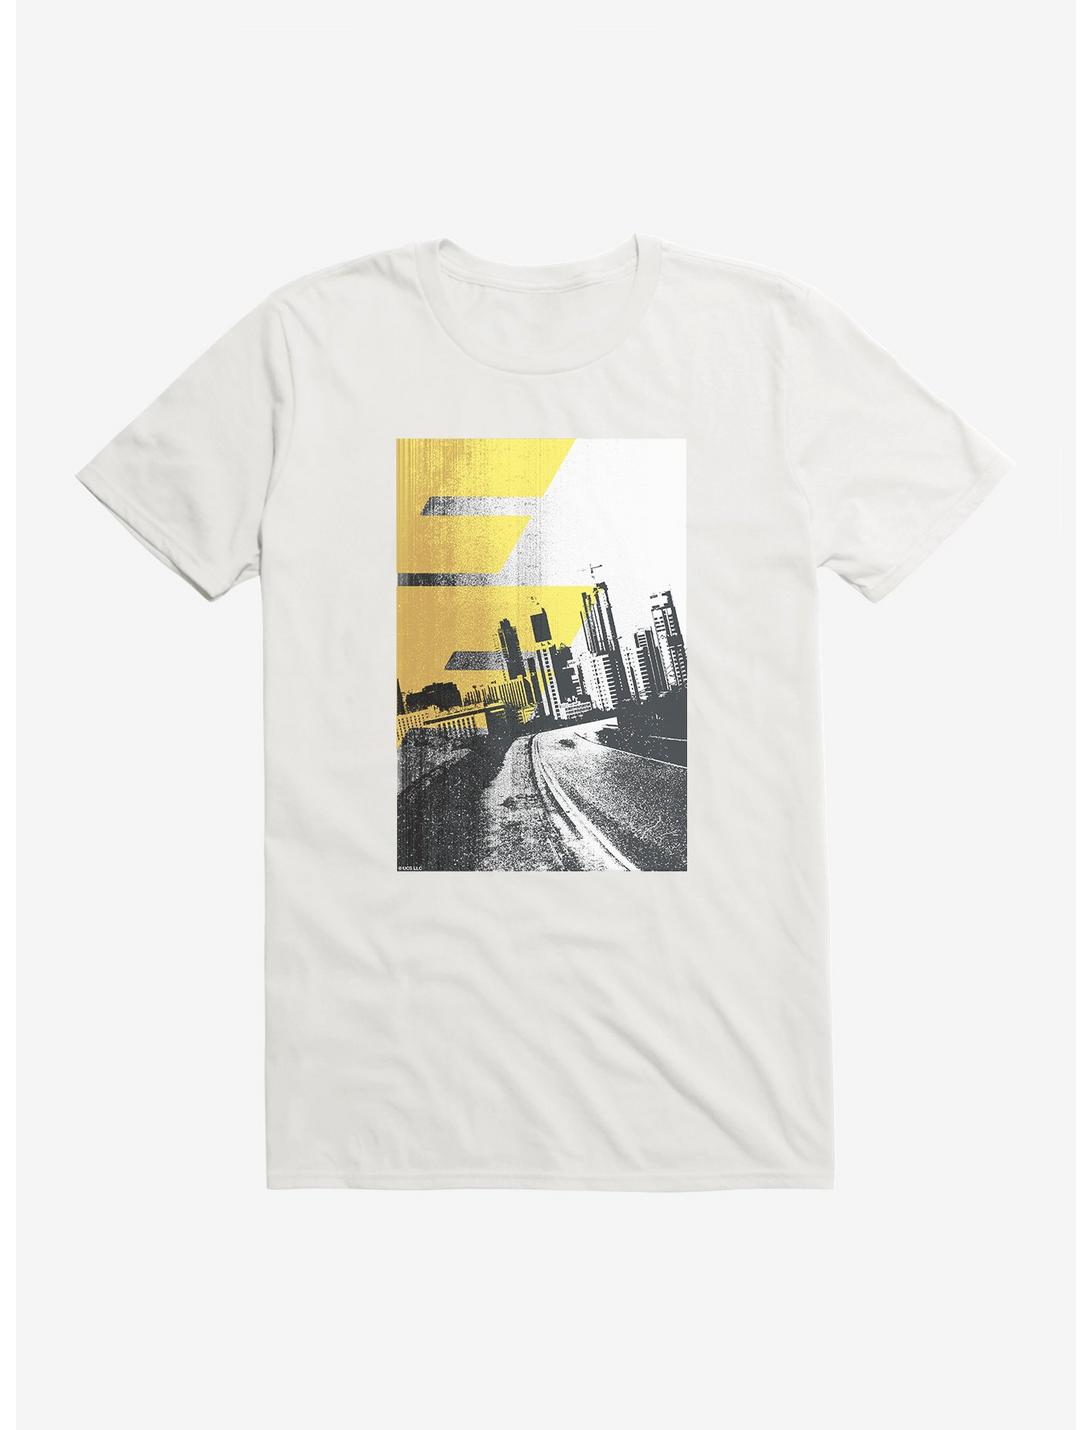 Fast & Furious Pavement T-Shirt, , hi-res